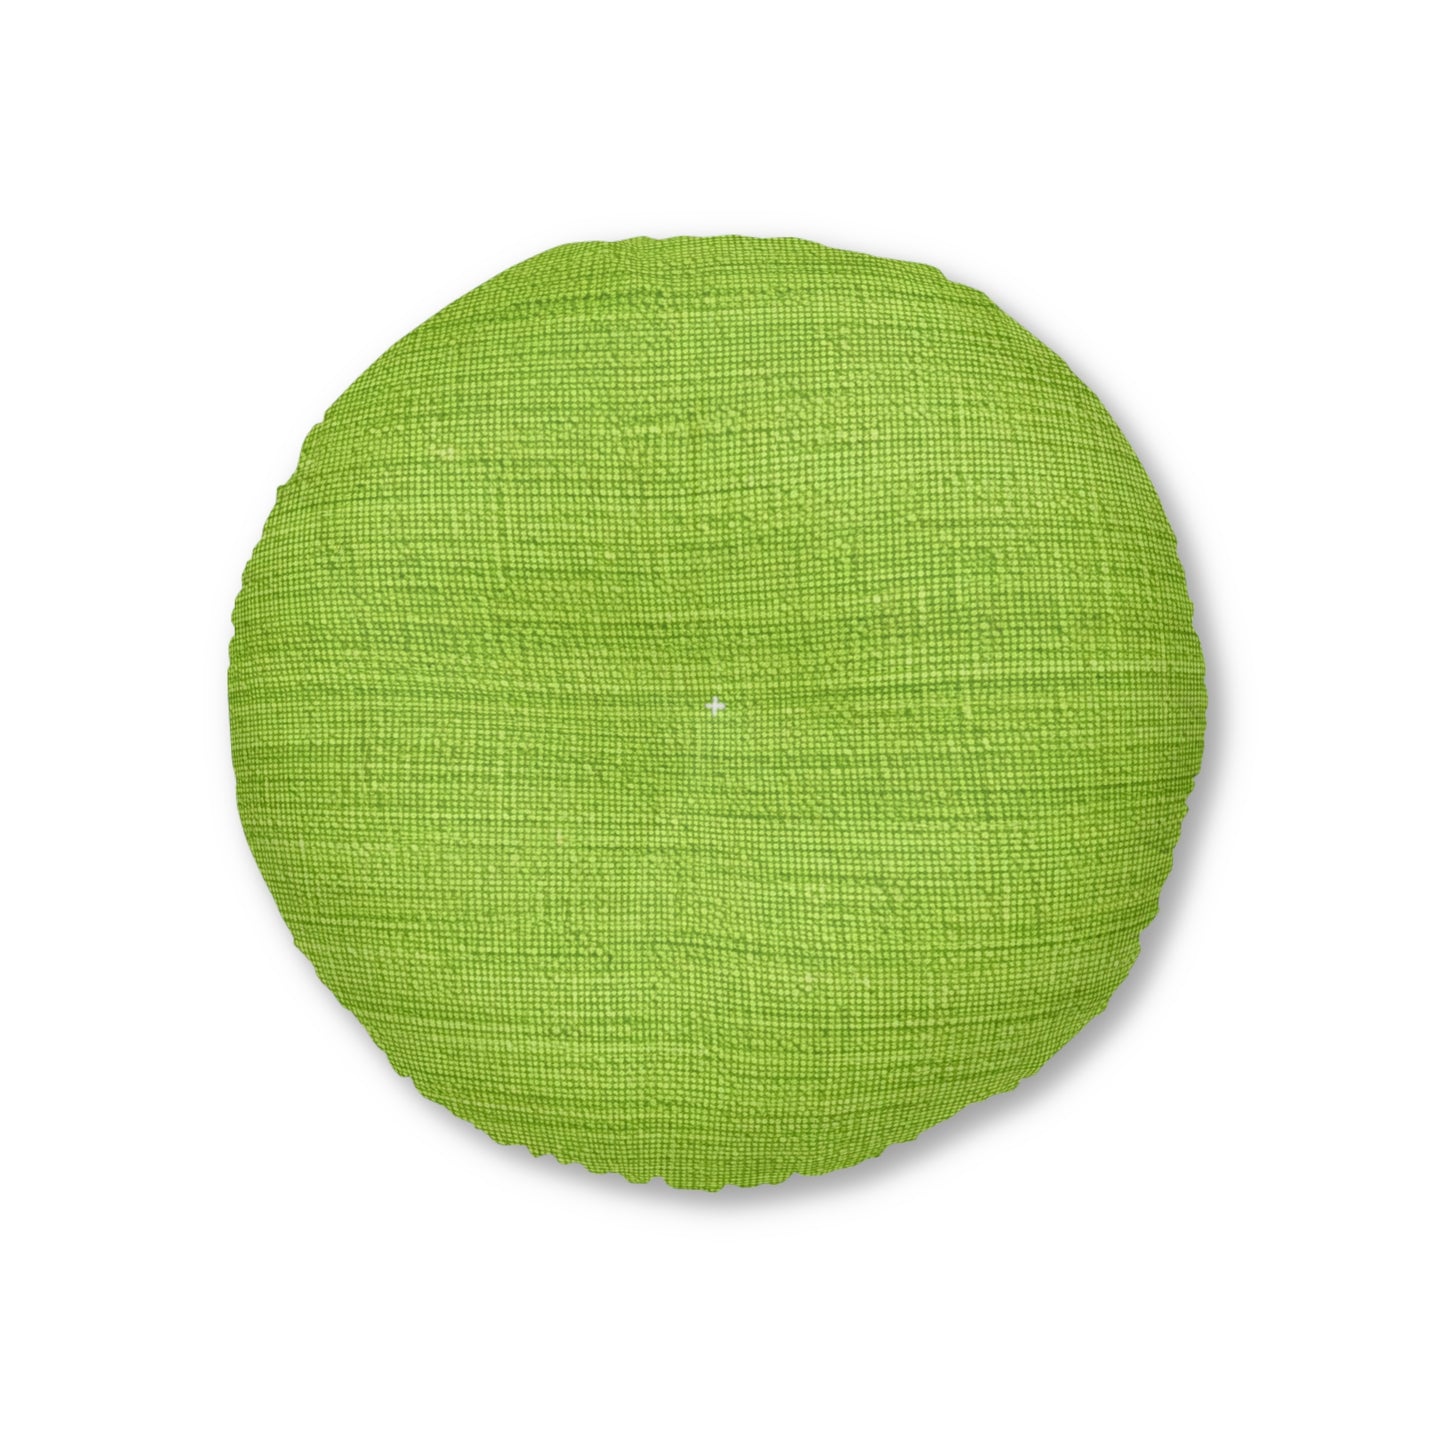 Lush Grass Neon Green: Denim-Inspired, Springtime Fabric Style - Tufted Floor Pillow, Round